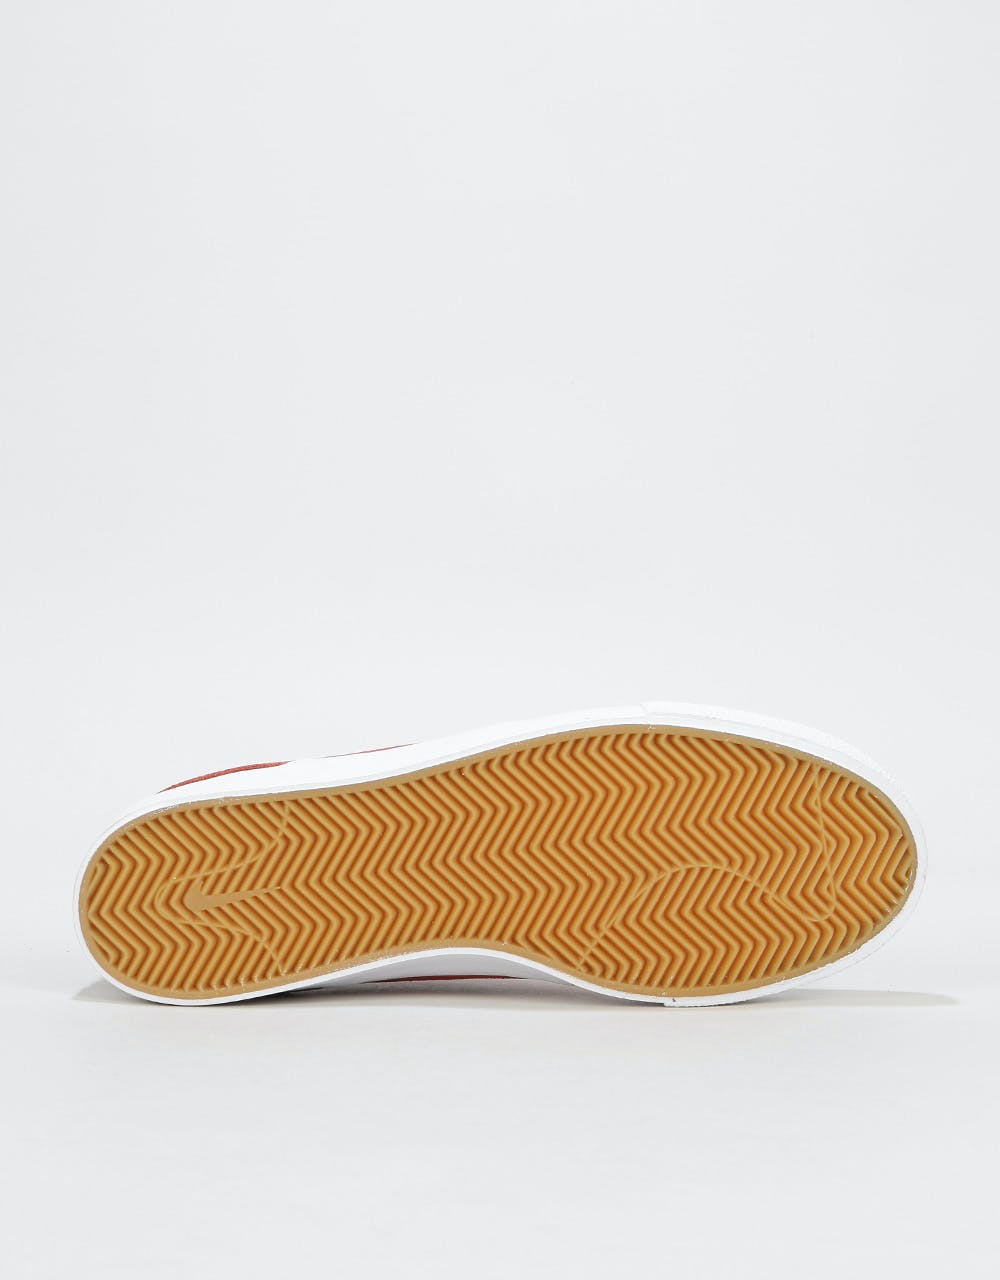 Nike SB Zoom Janoski RM Skate Shoes - Desert Ore/Lt Armory Blue-Dusty